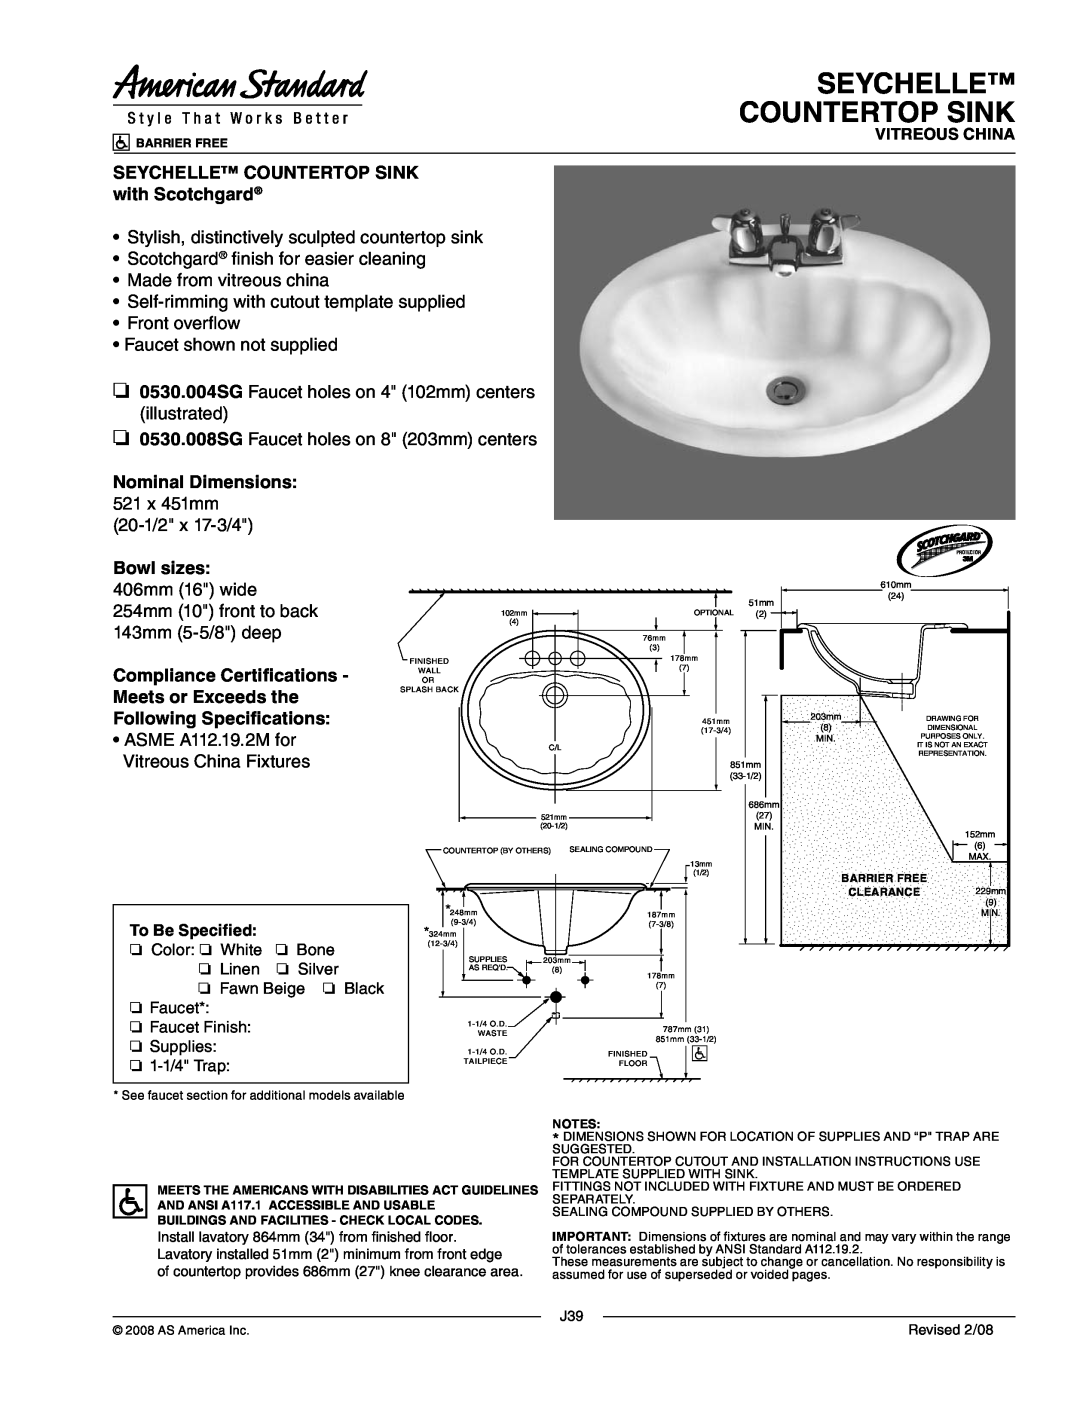 American Standard 0530.004SG dimensions Seychelle Countertop Sink, SEYCHELLE COUNTERTOP SINK with Scotchgard, Bowl sizes 